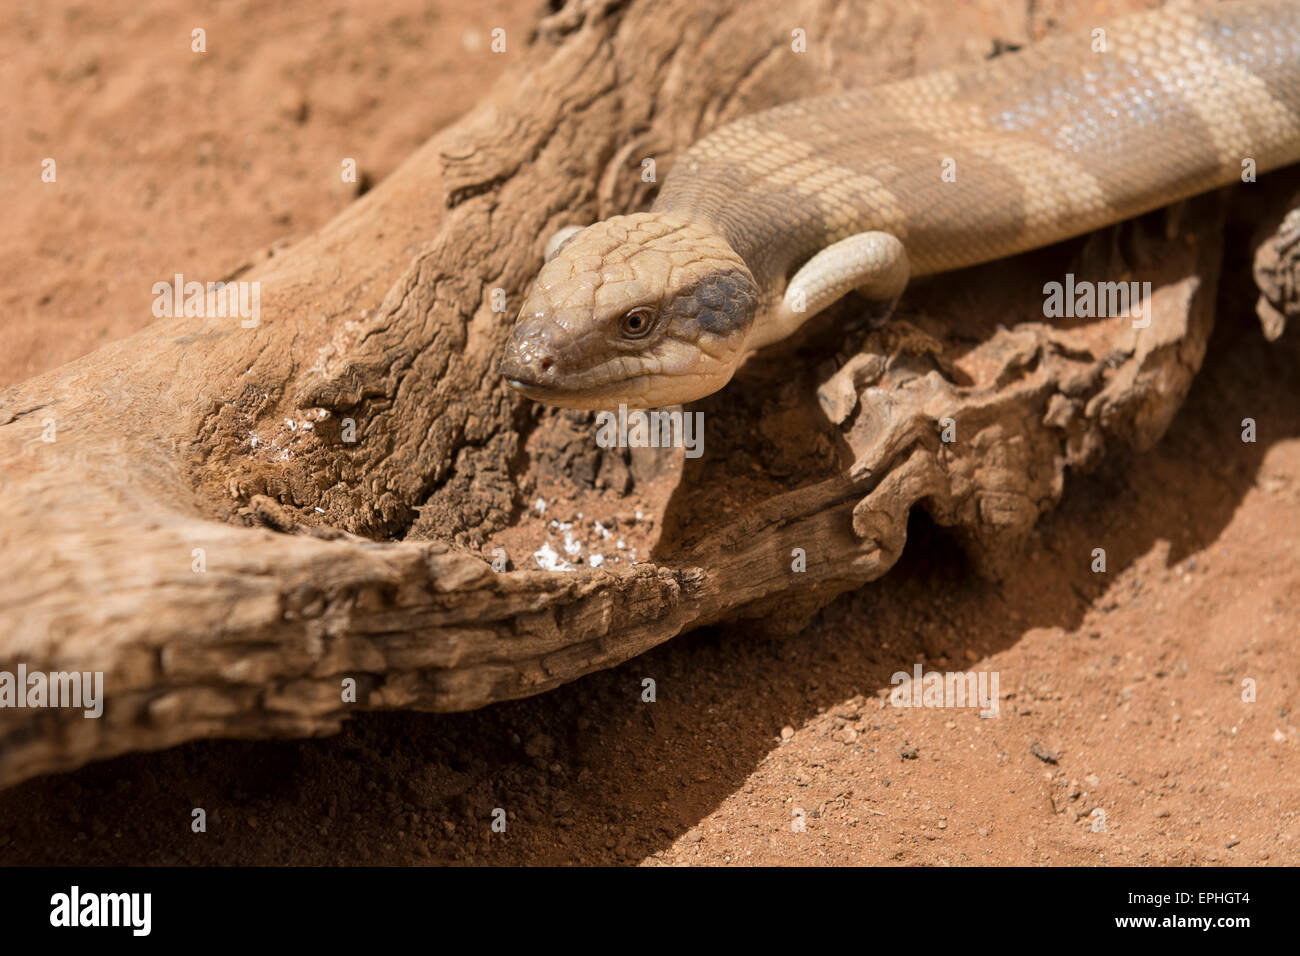 Australia, NT, Alice Springs. Alice Springs Reptile Center. Western Blue-tongued lizard (Captive: Tiliqua occipitalis) on a log Stock Photo